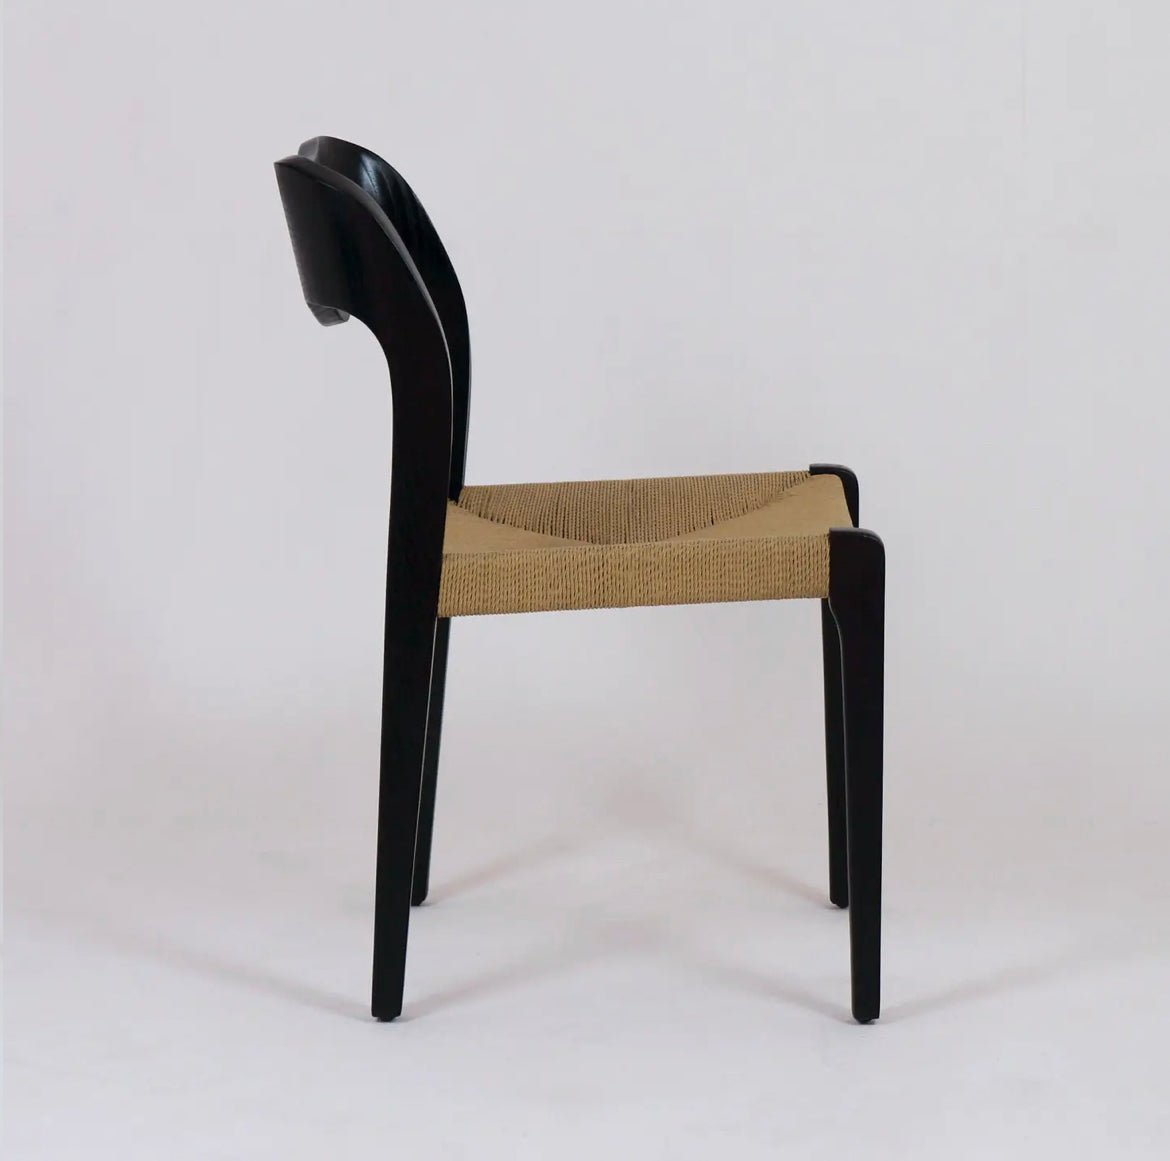 ‘Emmalene’ Dining Chair (Teak) - EcoLuxe Furnishings